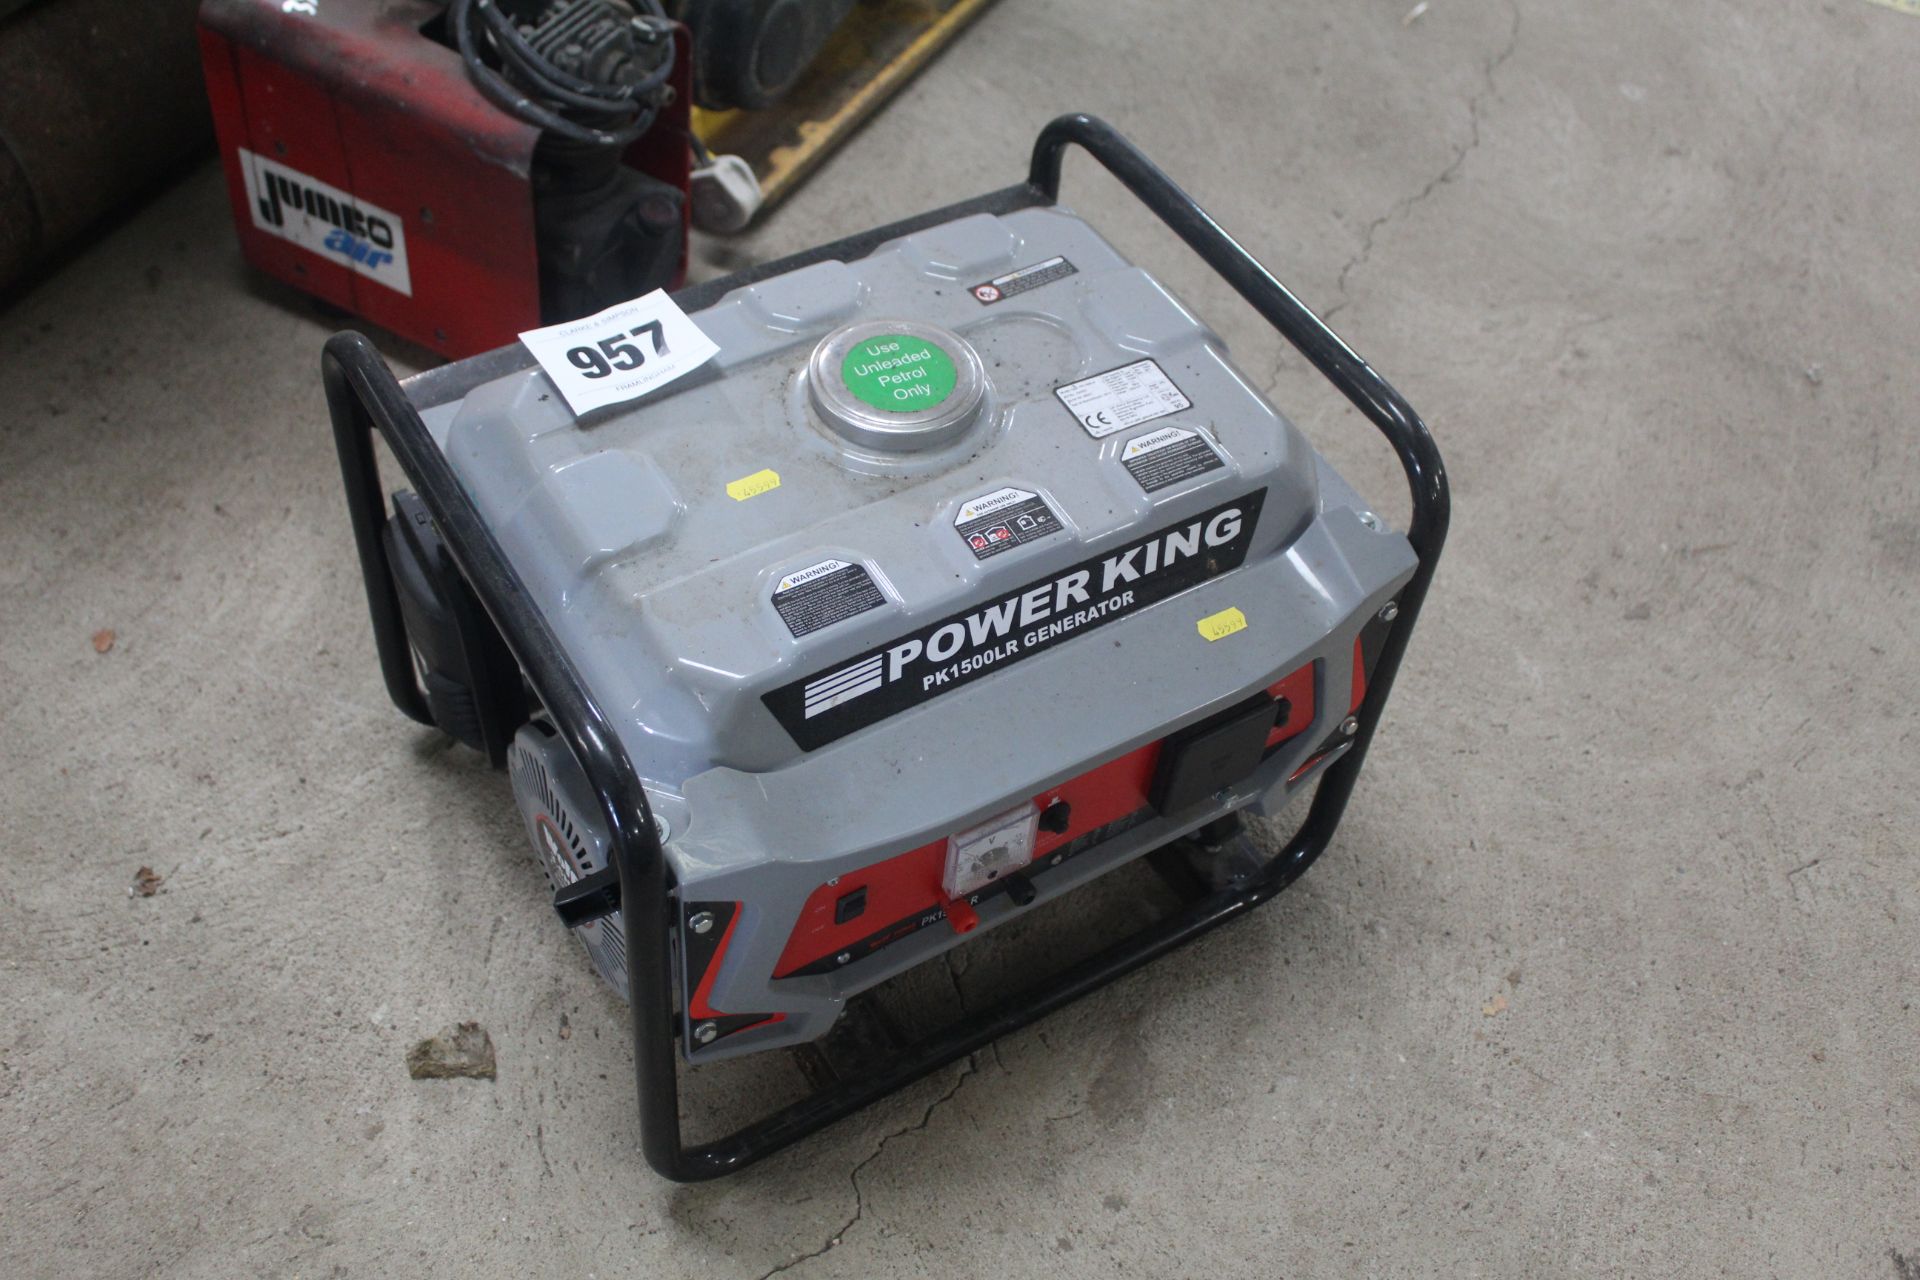 PowerKing petrol generator.